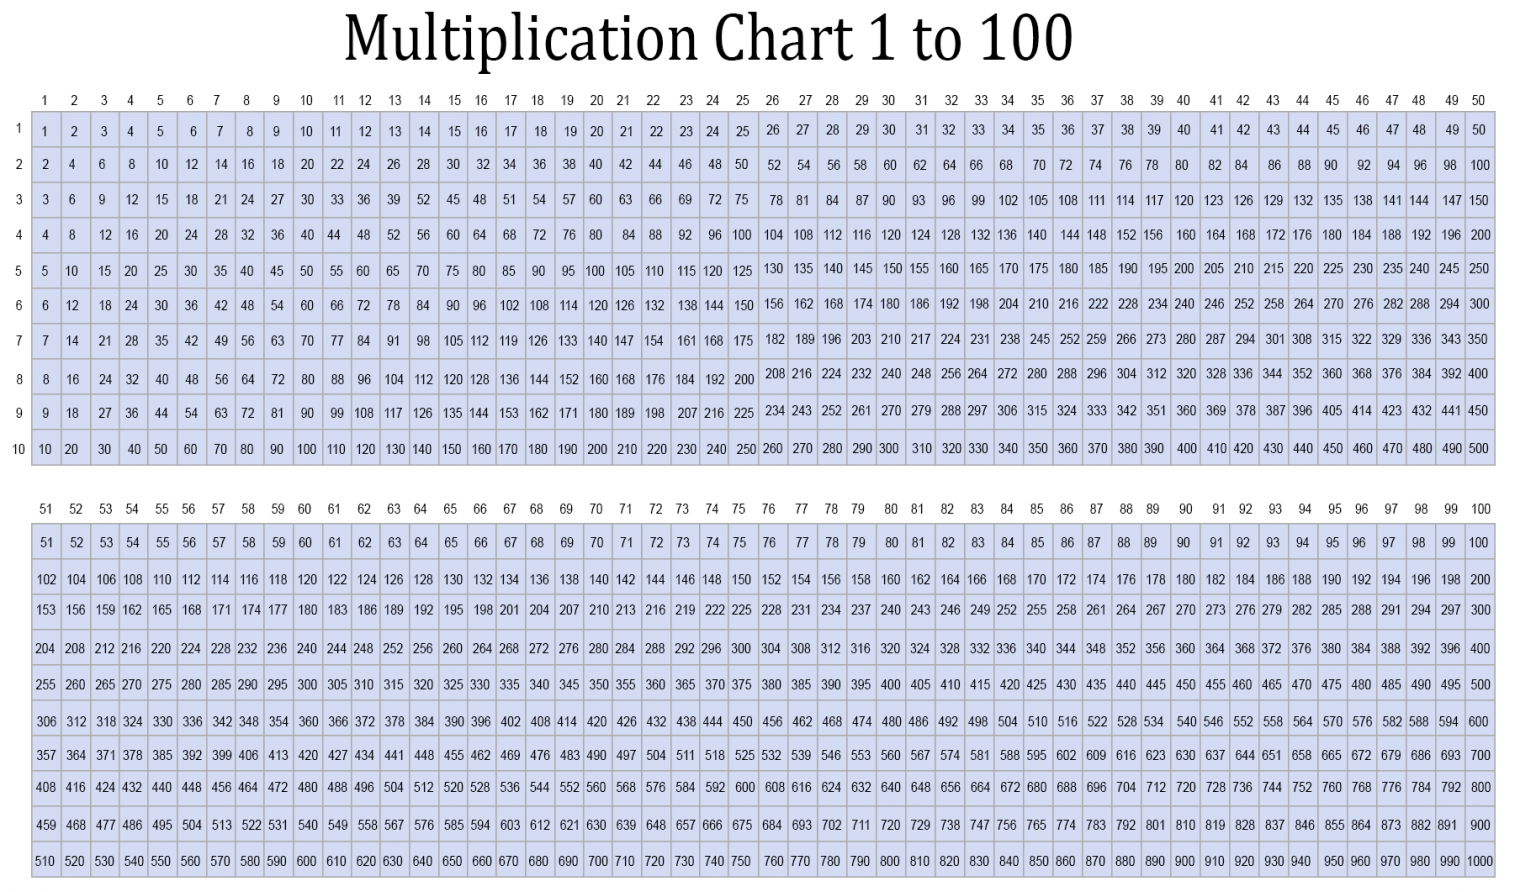 Multiplication table 1 through 100